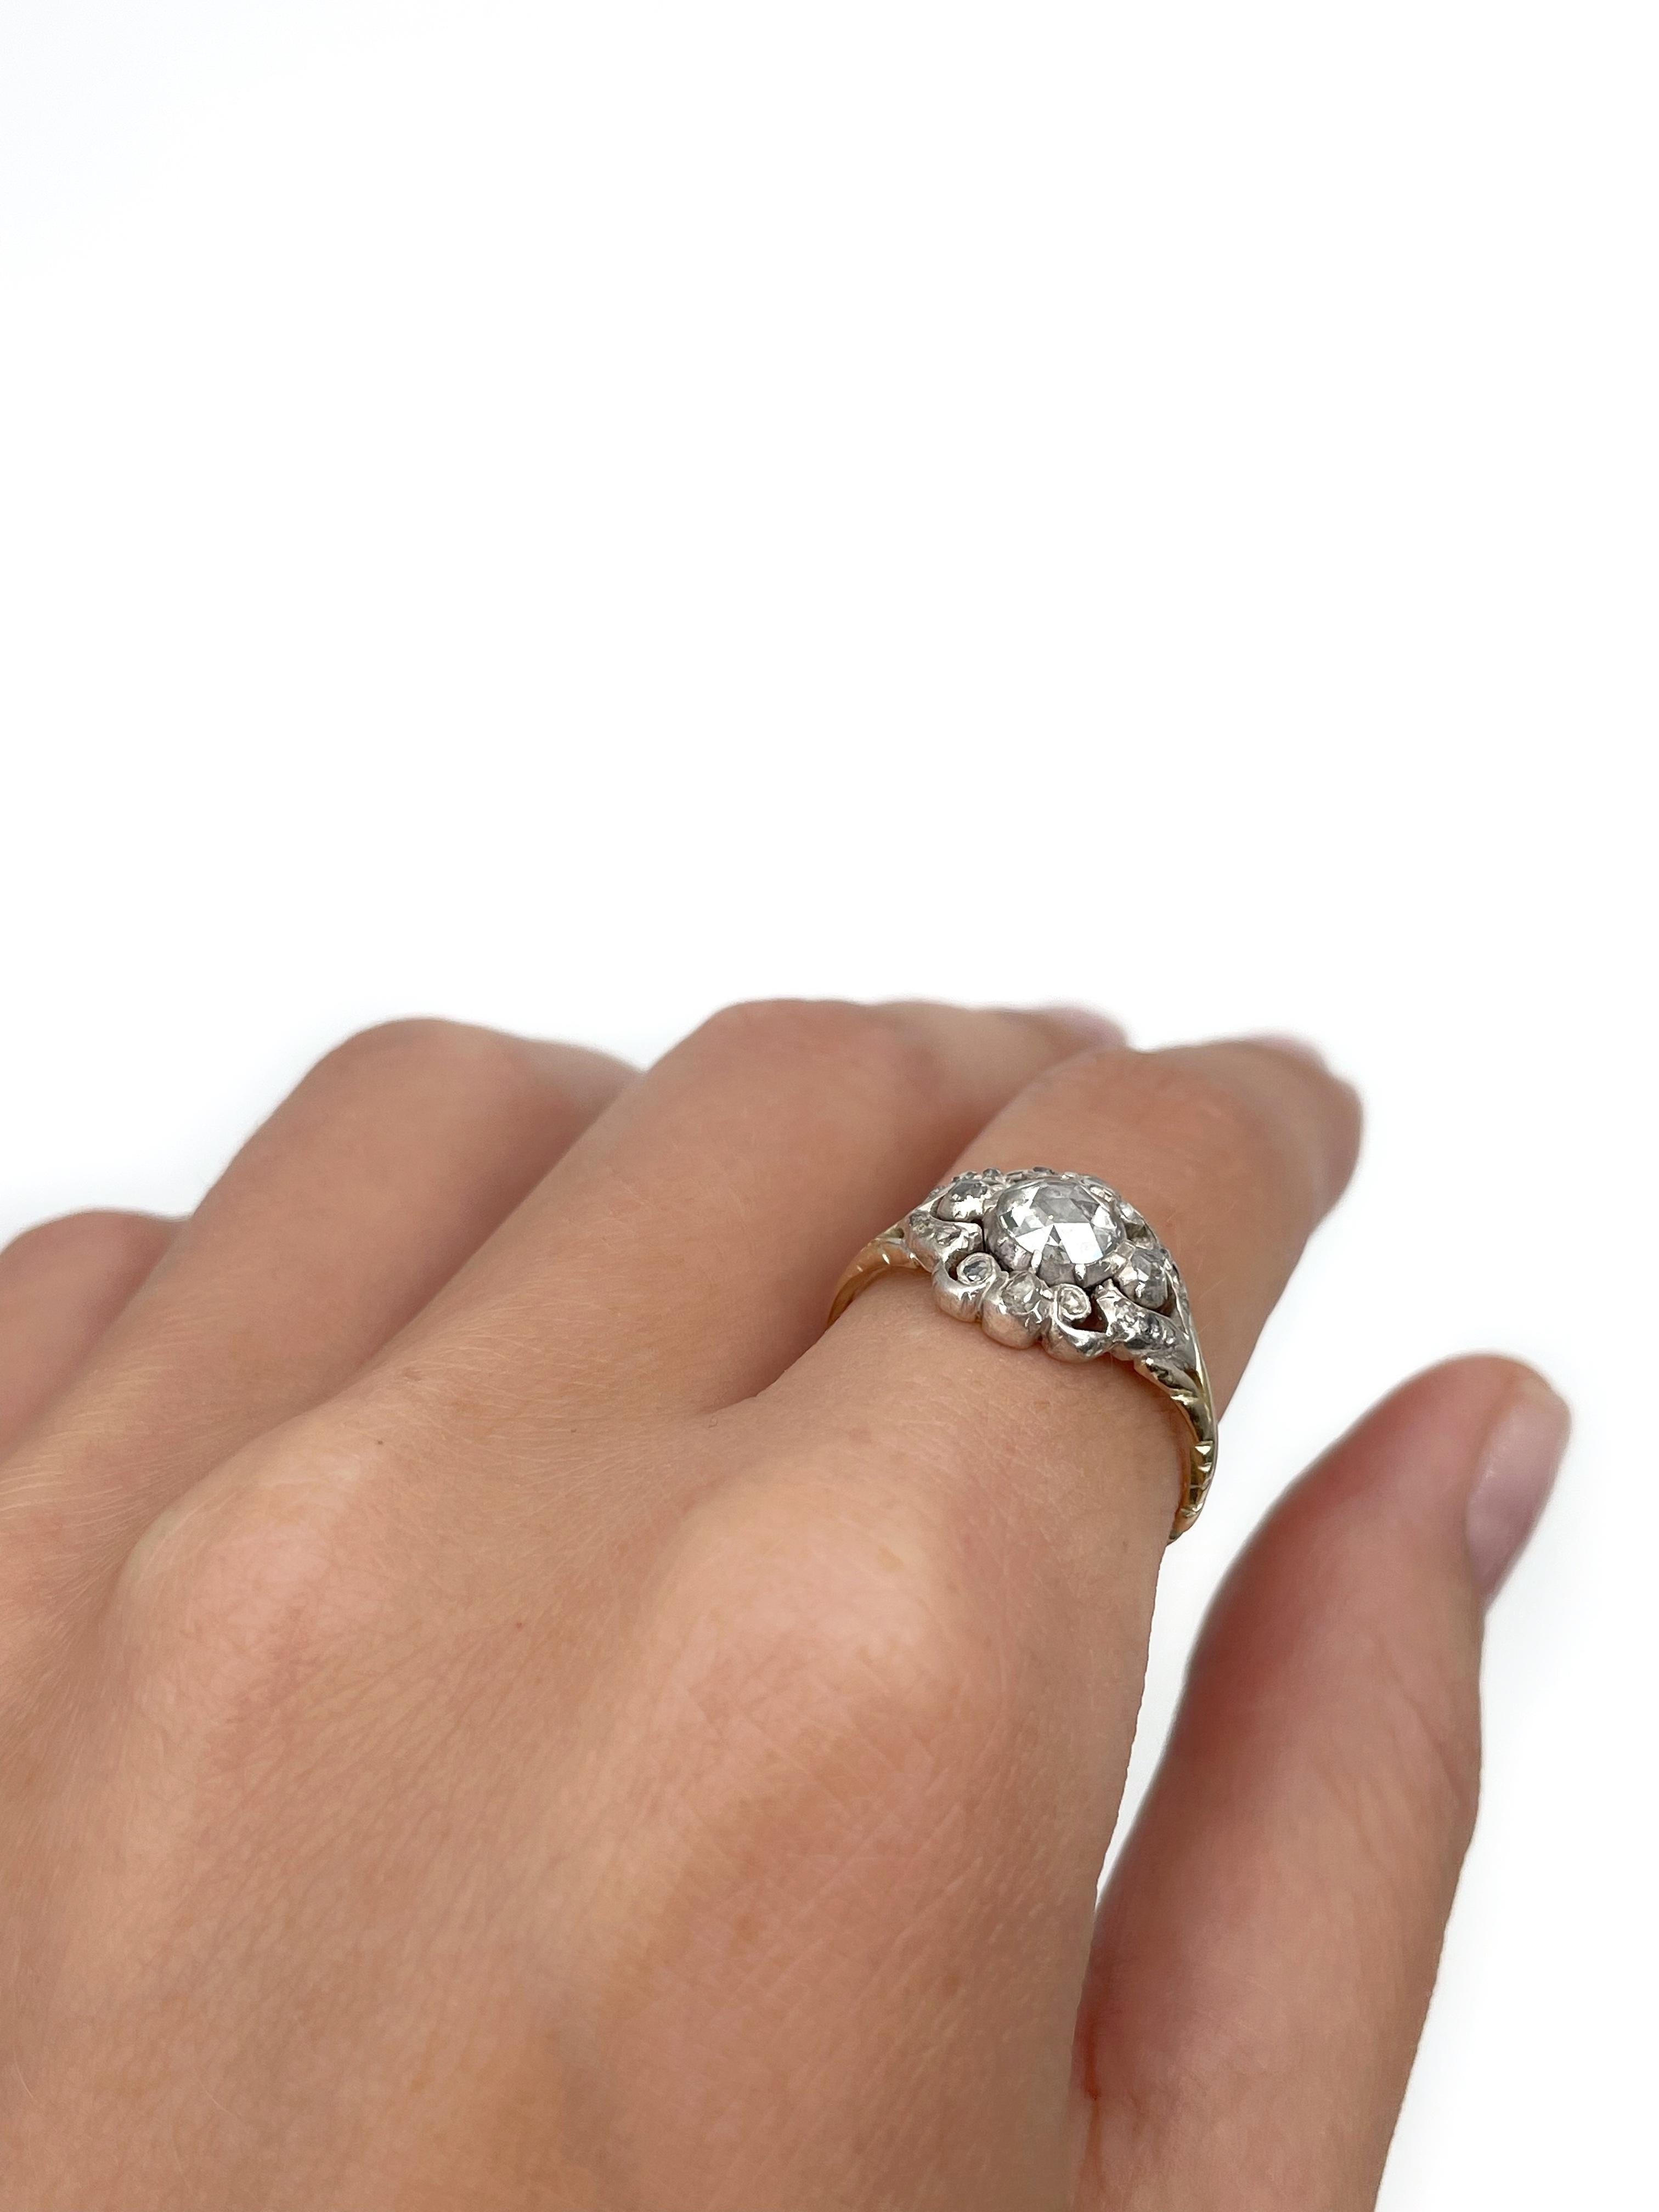 Antique Victorian 14K Gold Rose Cut Diamond Engagement Ring 1